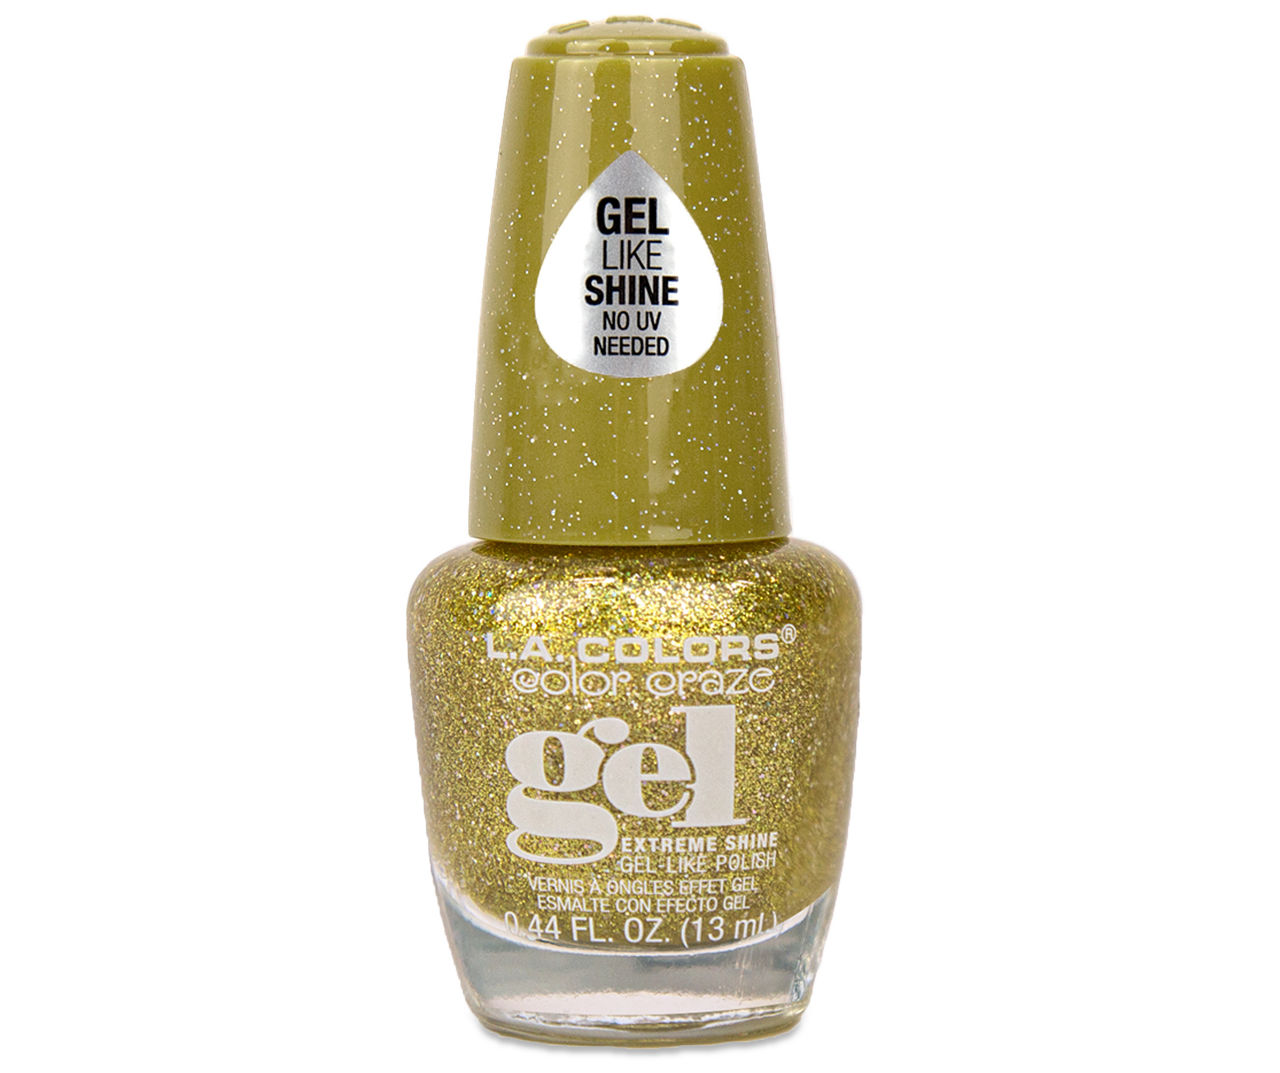 Color Craze Shimmer Gel Nail Polish in Beaming, 0.44 Oz.